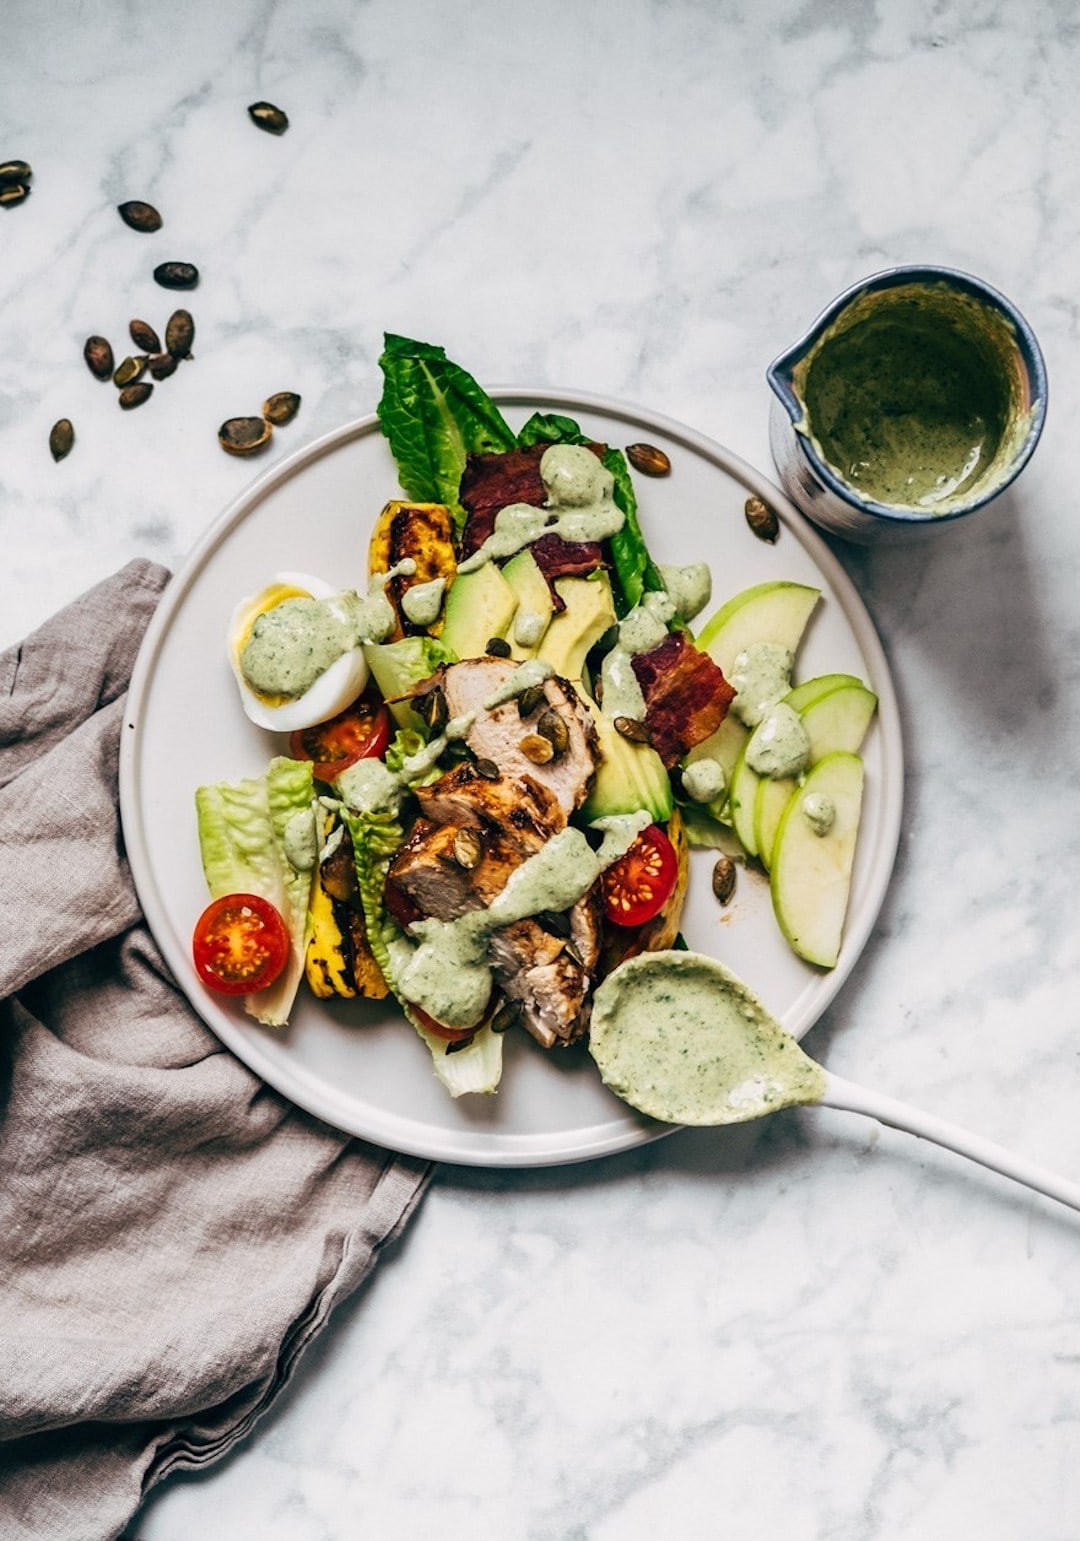 13+ Healthy Recipes with Hemp Hearts - Autumn Cobb Salad with Hemp Dressing